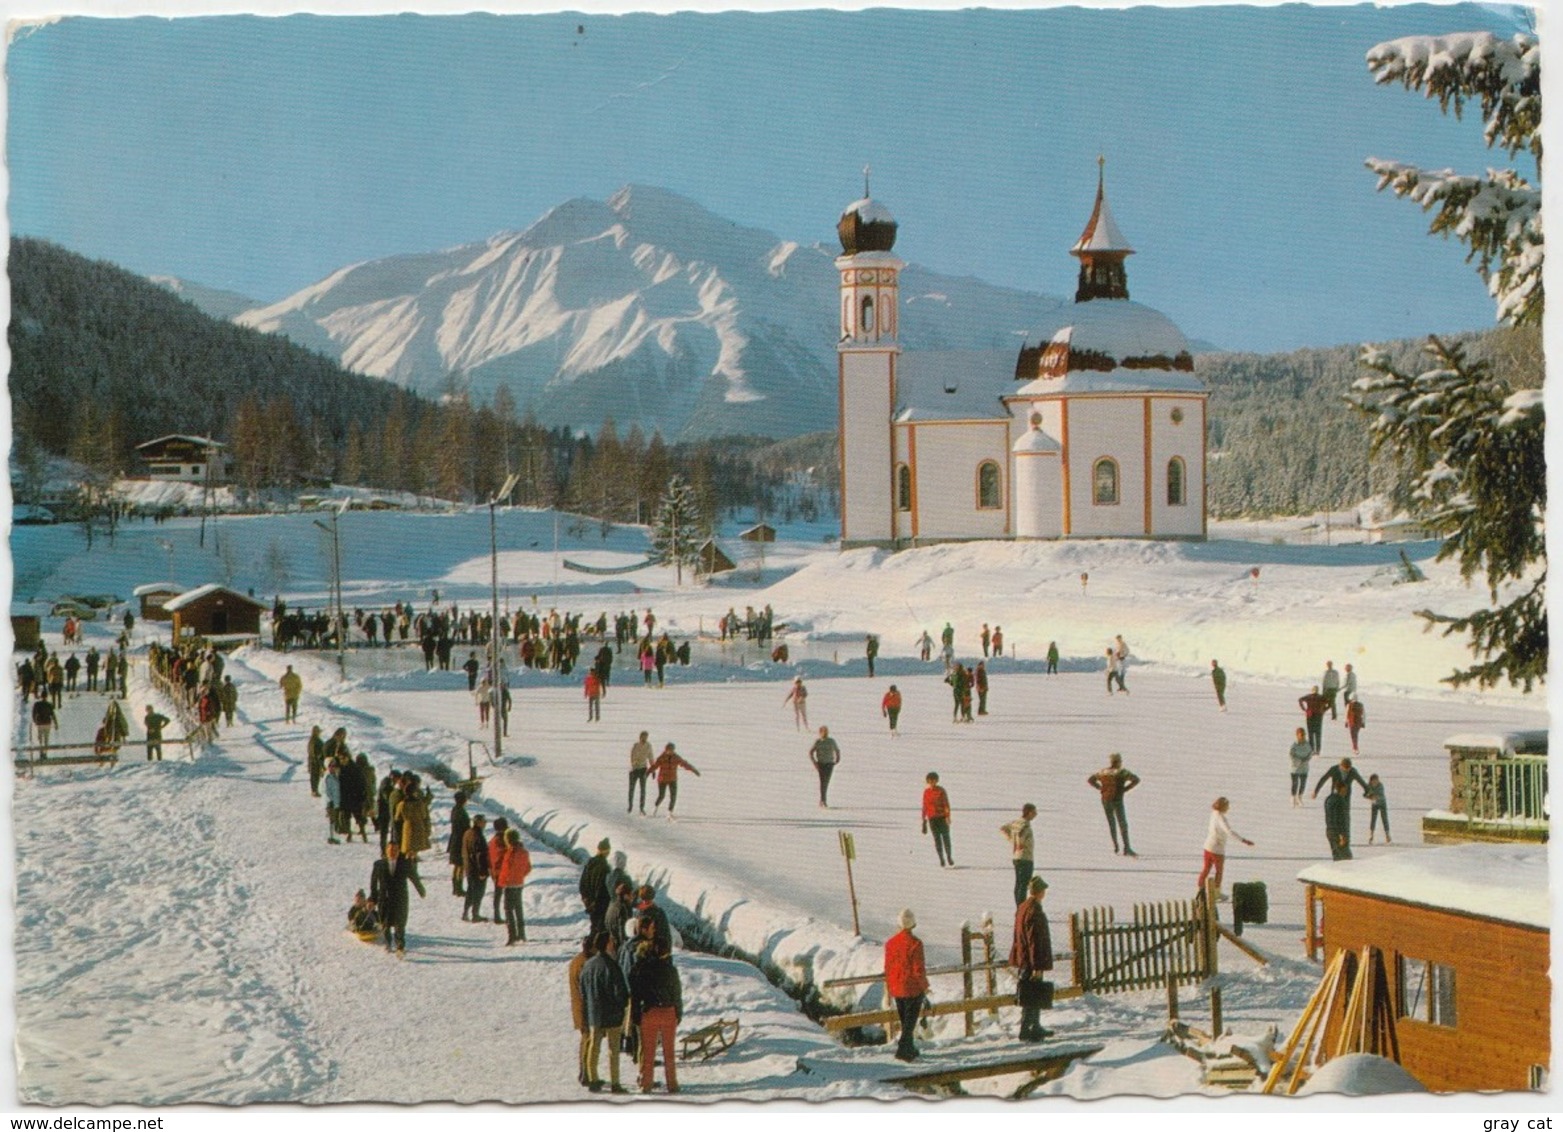 "Seekirchl" In Seefeld, 1200 M, Tirol, Austria, Used Postcard [21842] - Seefeld